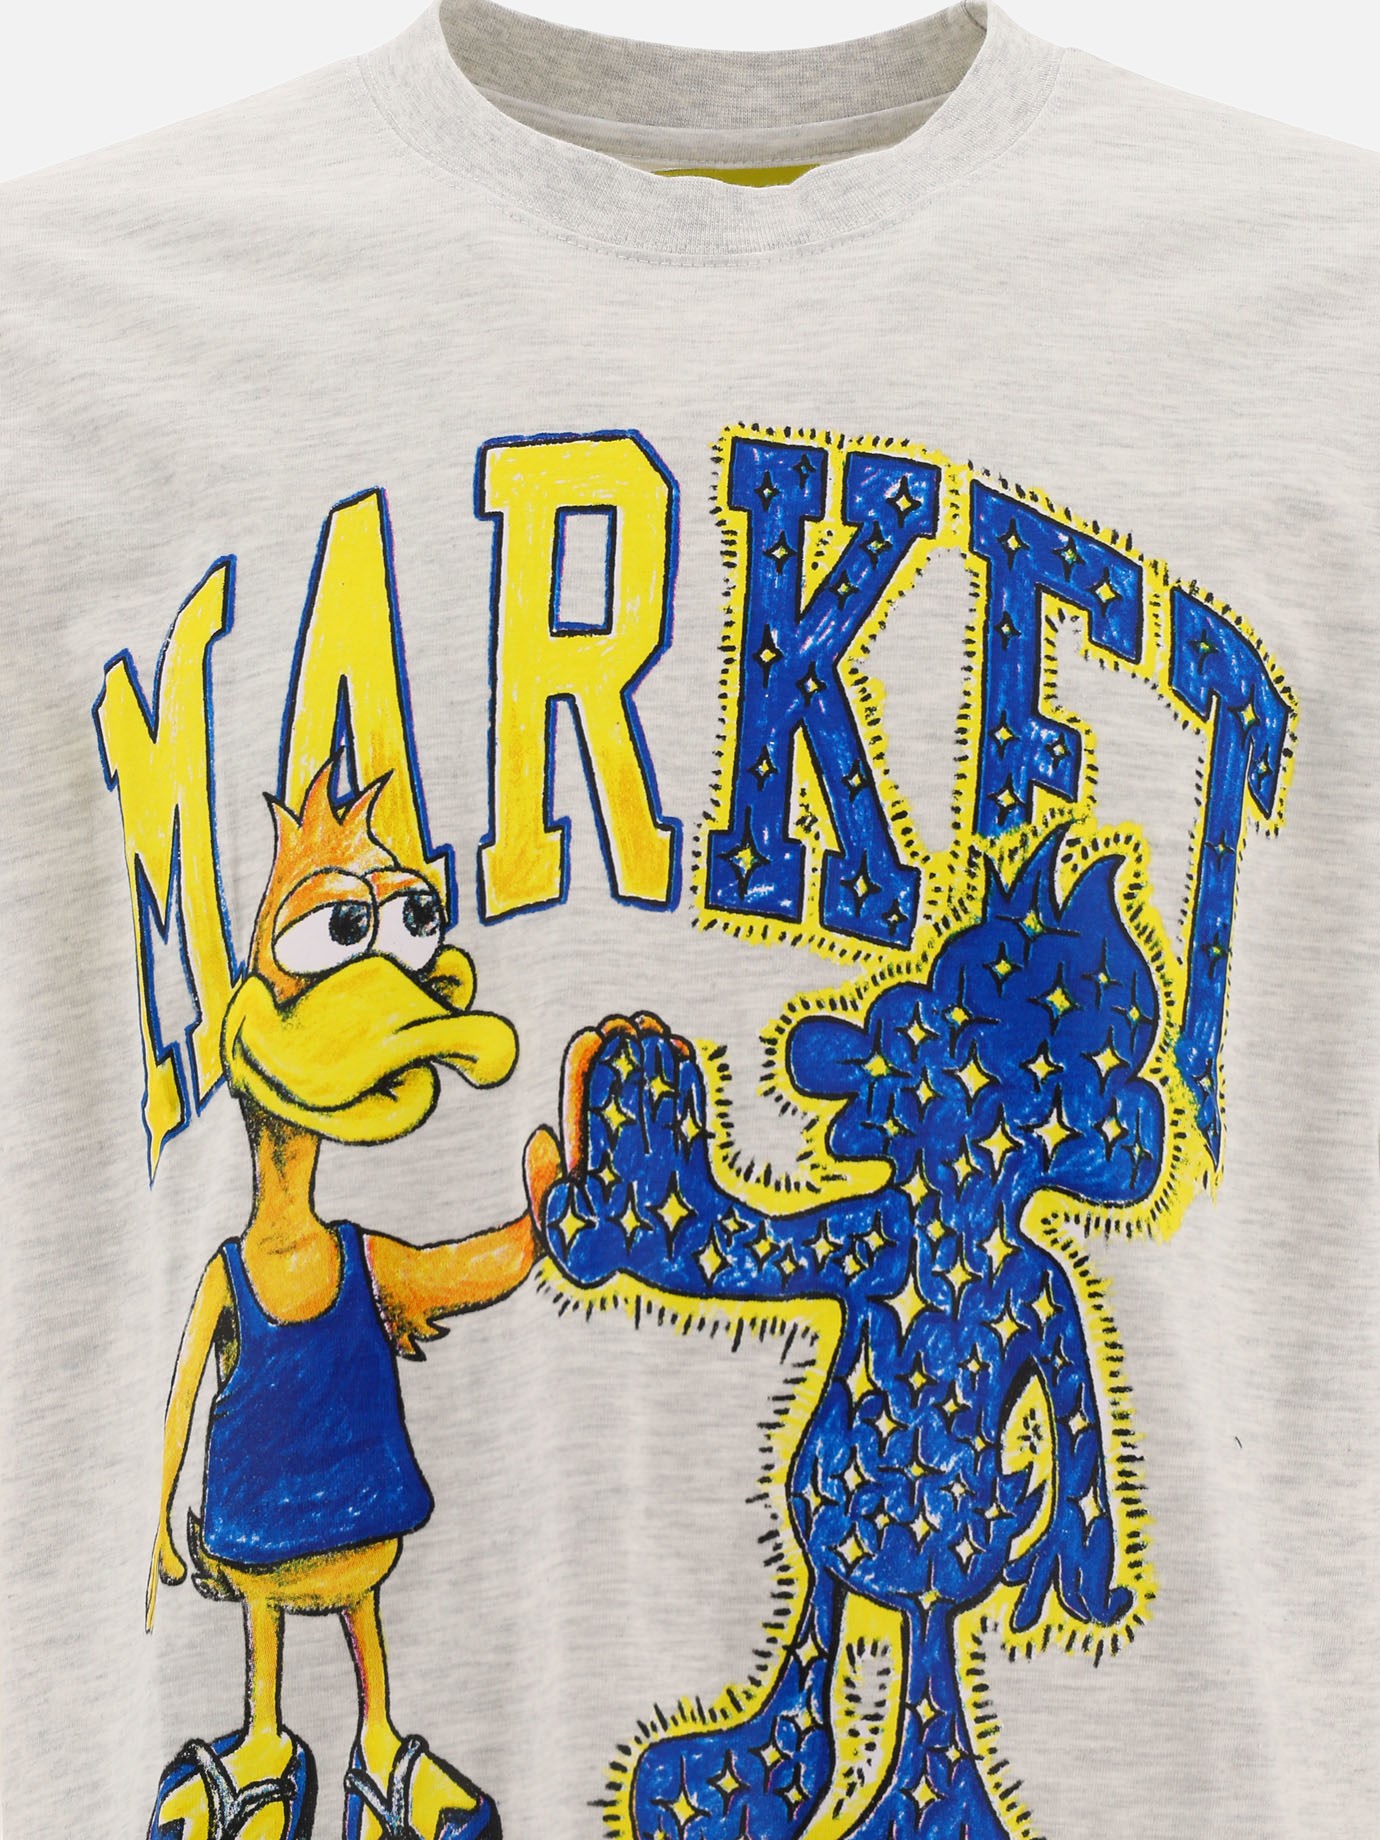  Dark and Light  t-shirt by Market